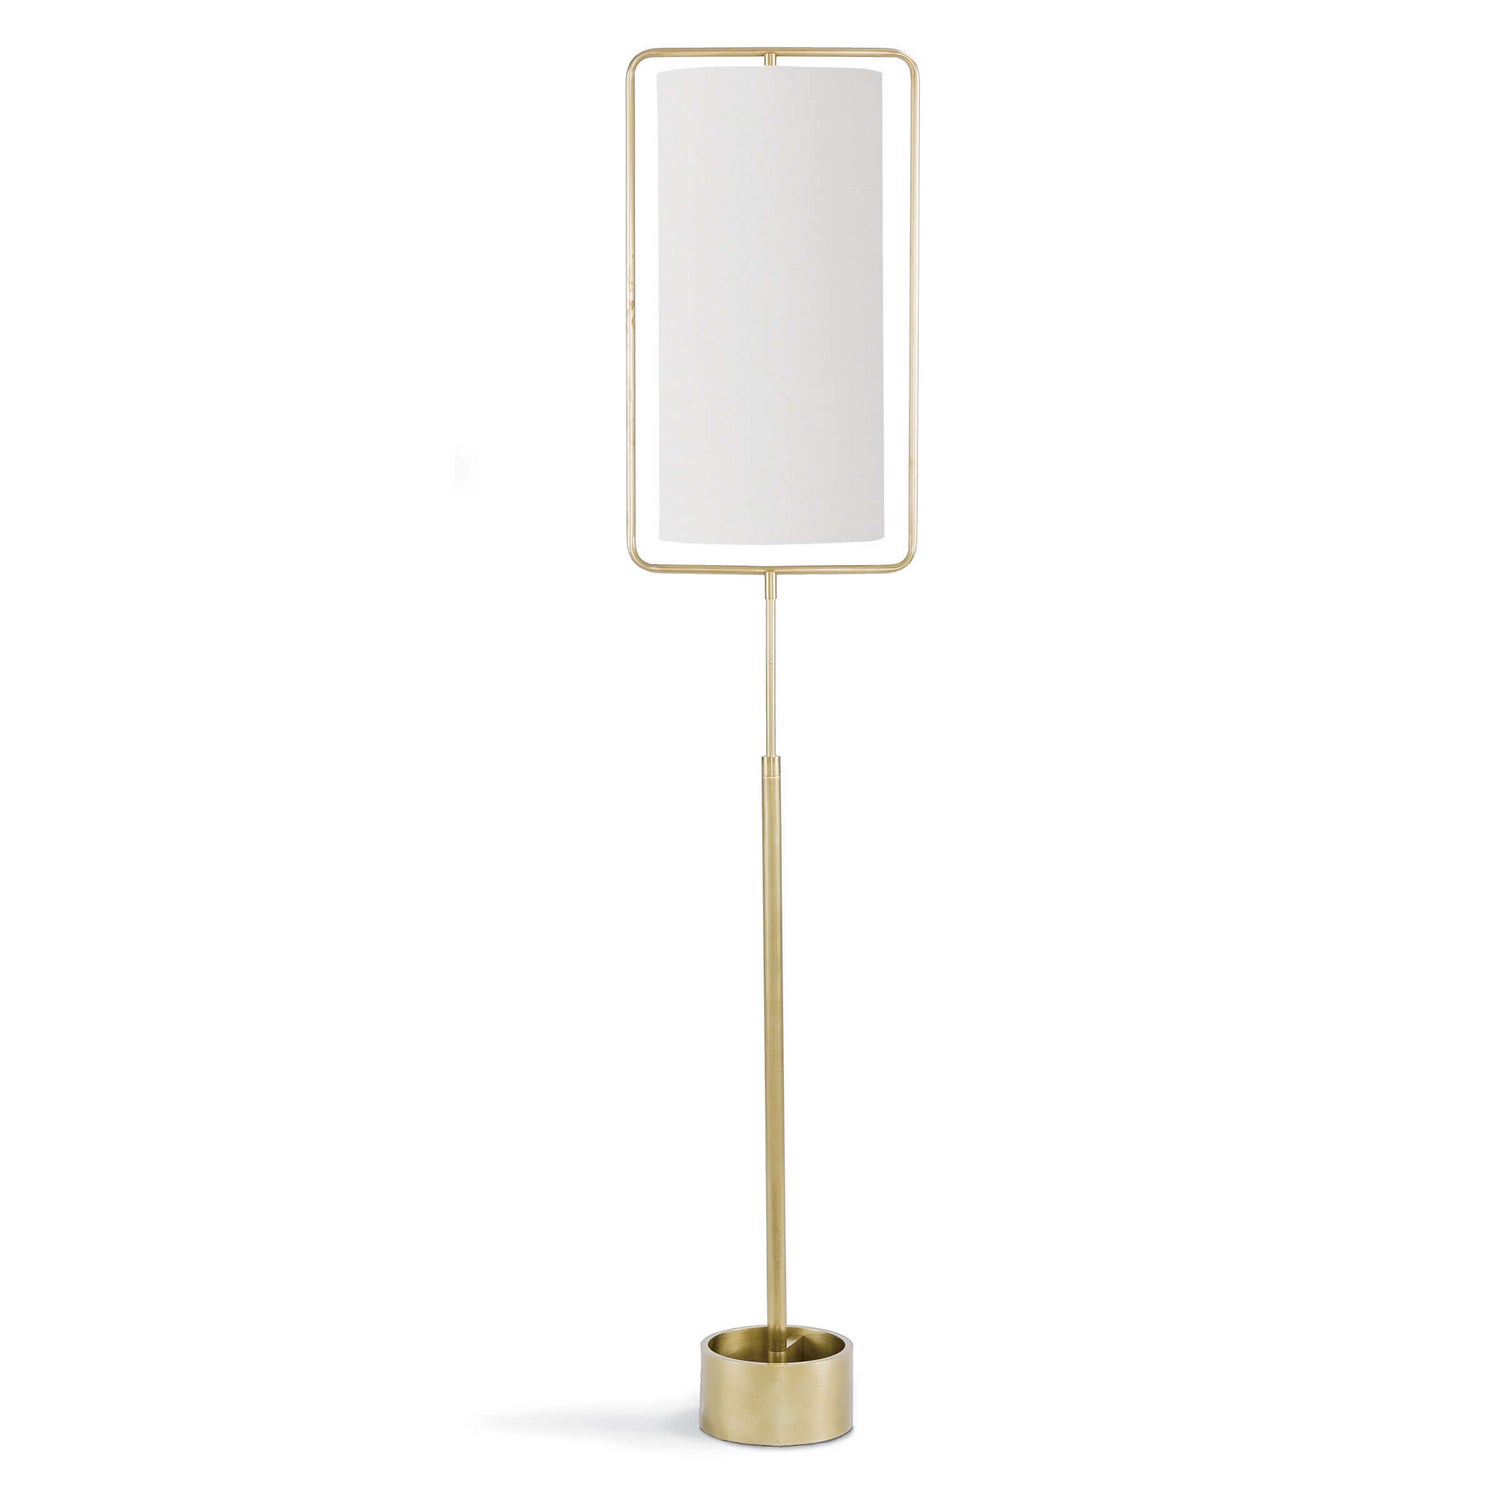 Regina Andrew - 14-1019NB - One Light Floor Lamp - Geo - Natural Brass